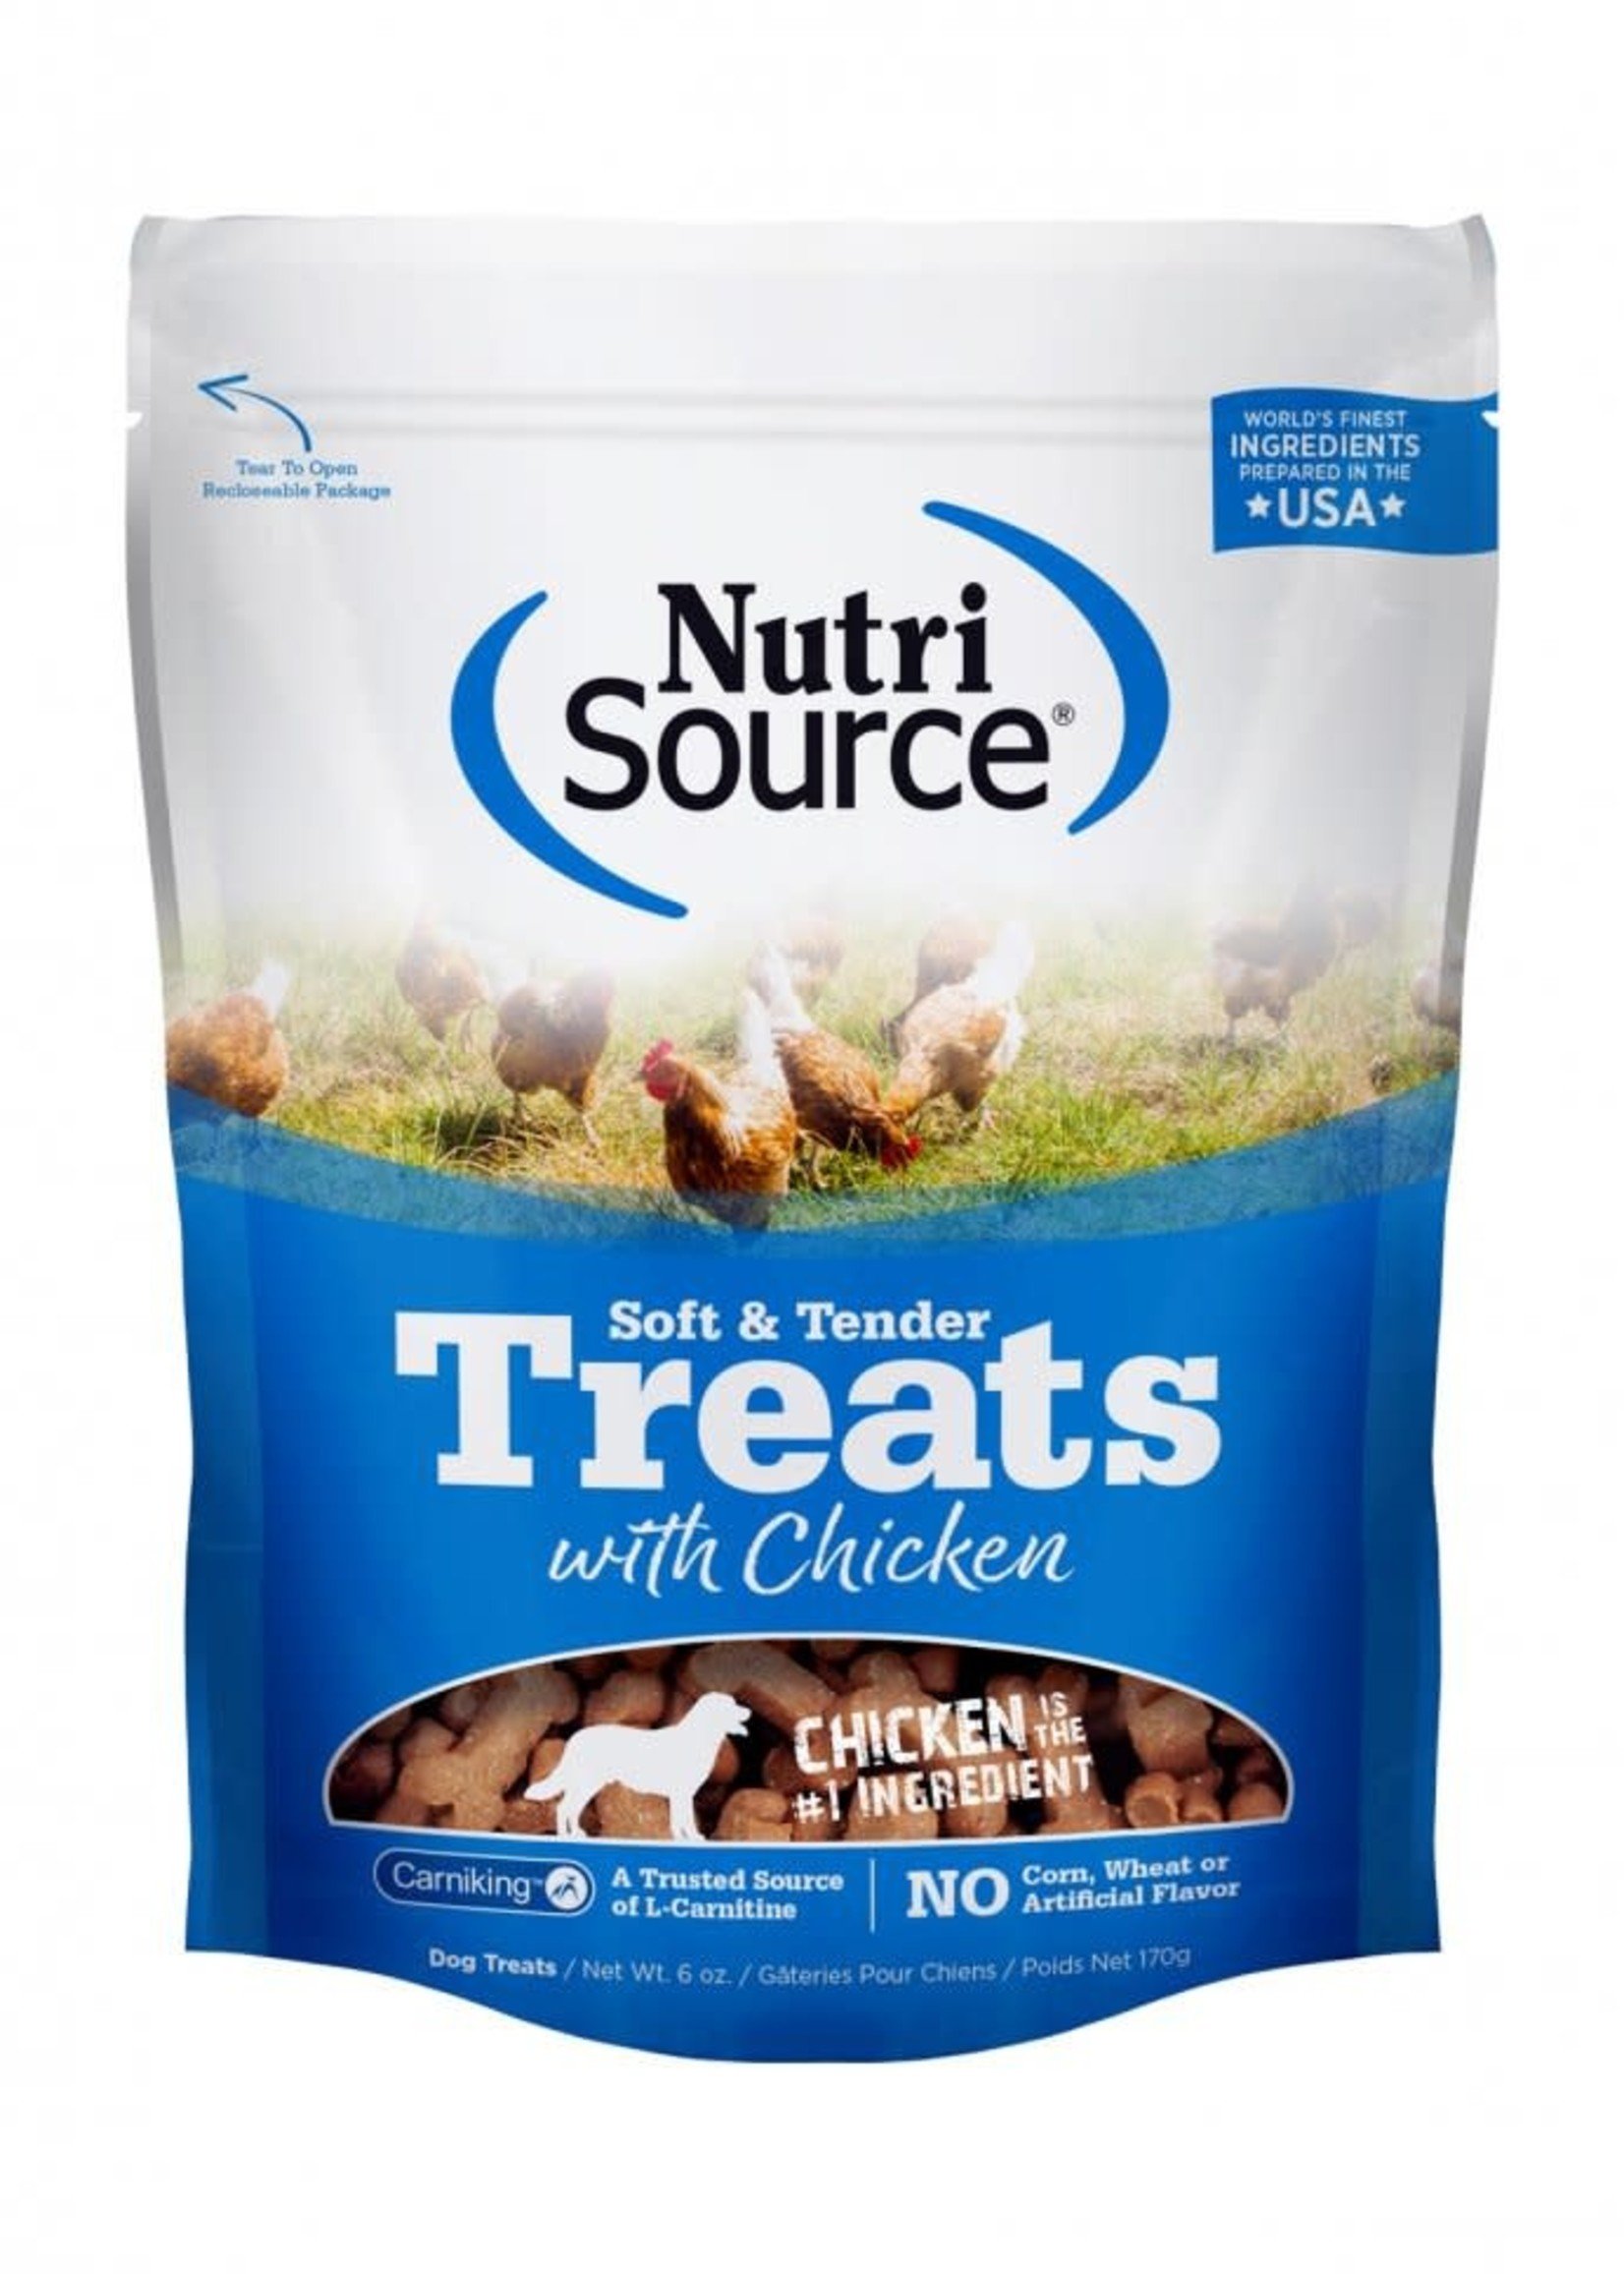 Nutrisource NutriSource Soft & Tender Chicken Treats 14oz